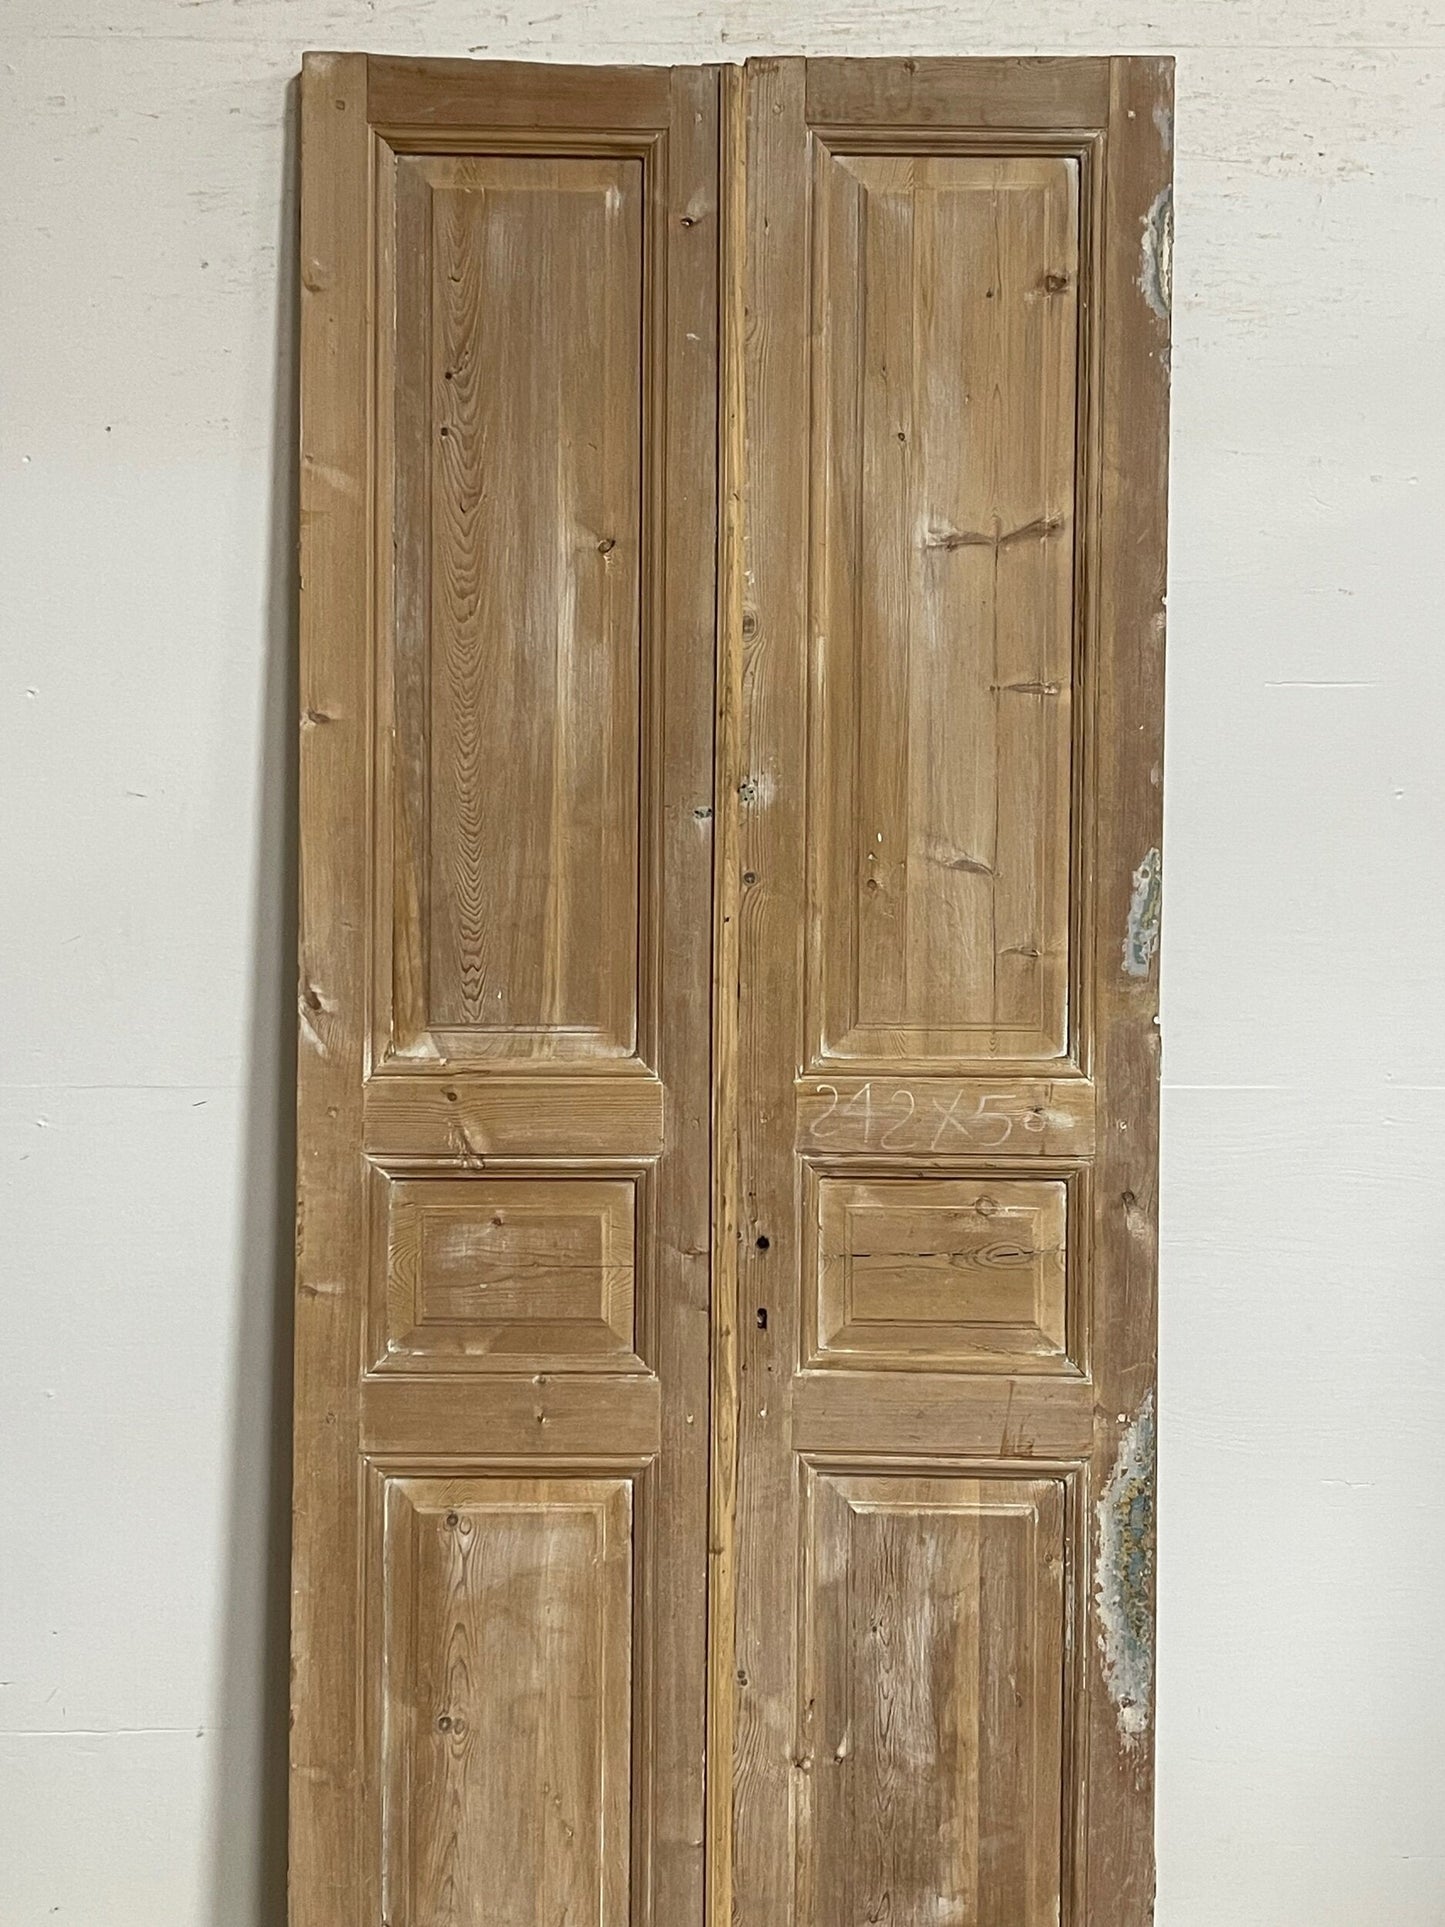 Antique French panel doors (95x39) I134